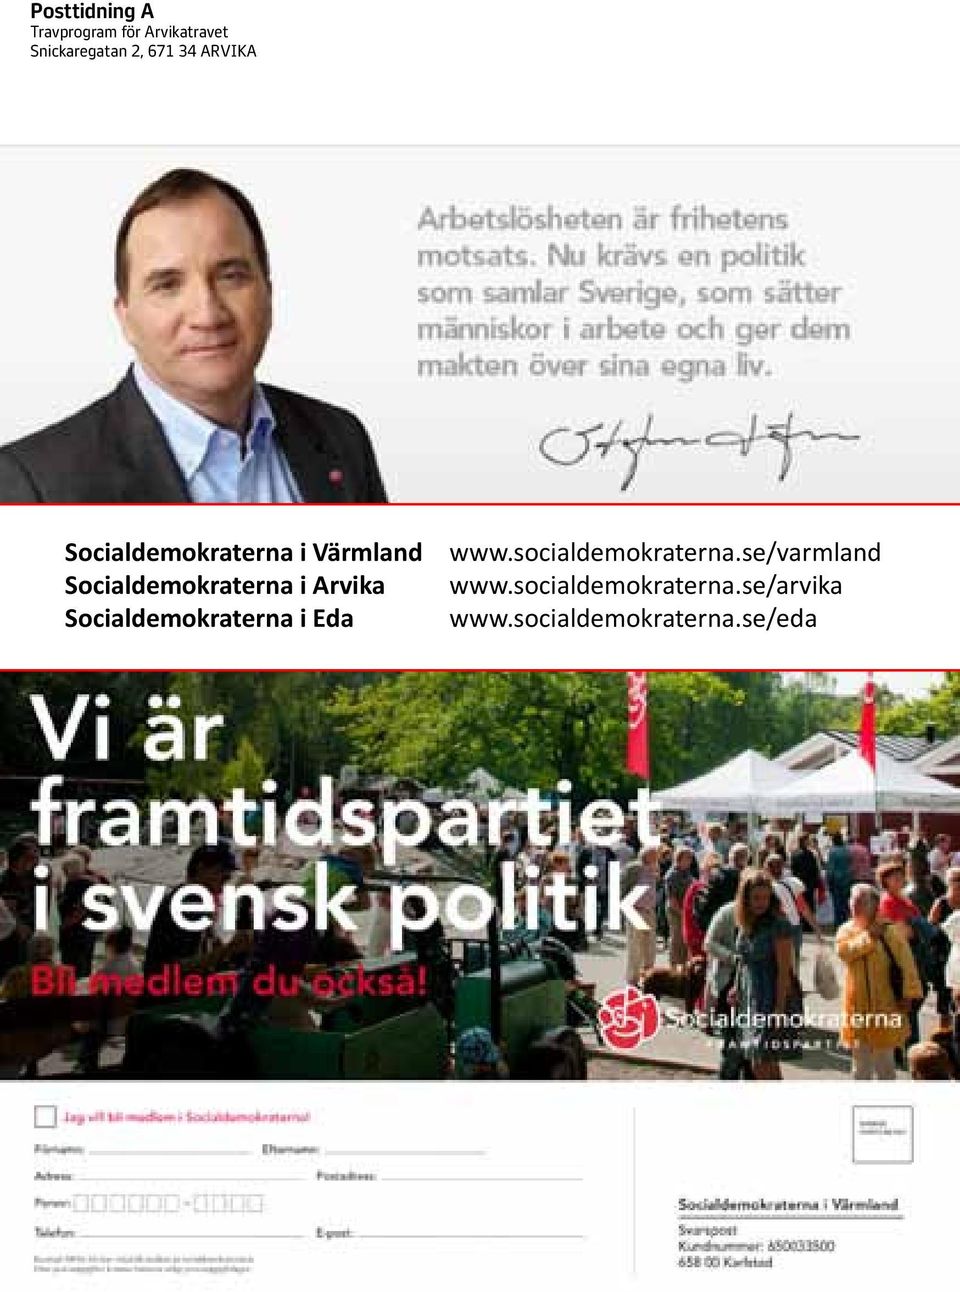 Arvika Socialdemokraterna i Eda www.socialdemokraterna.